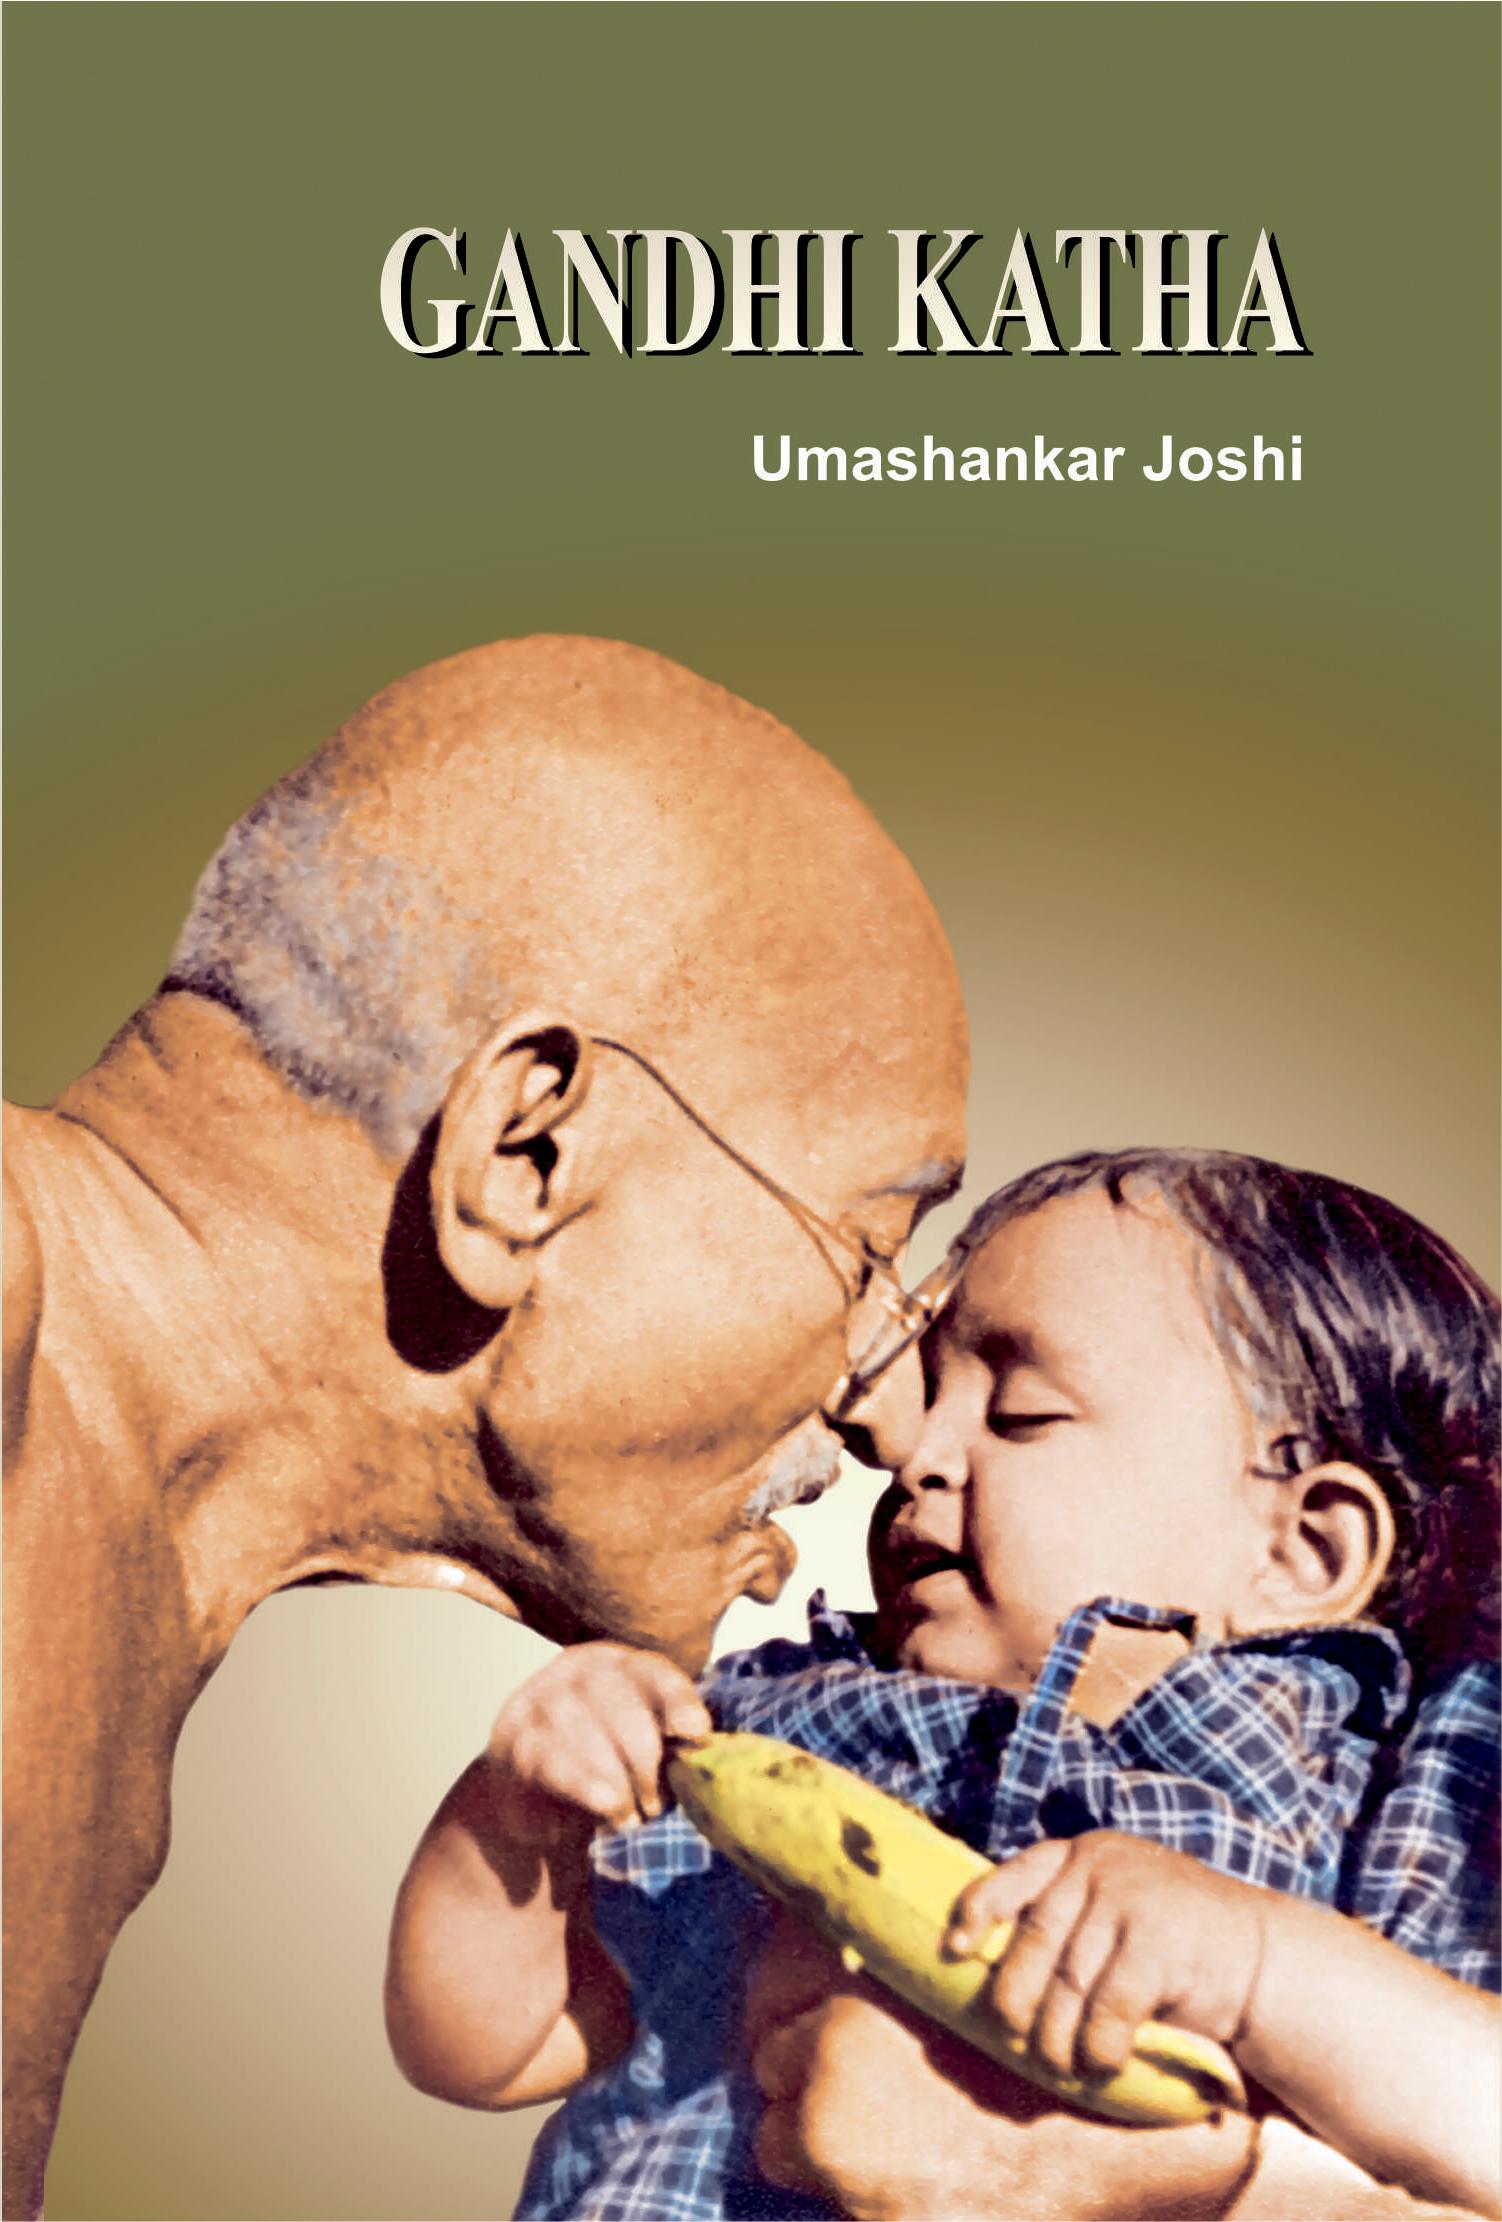 Gandhi Katha book